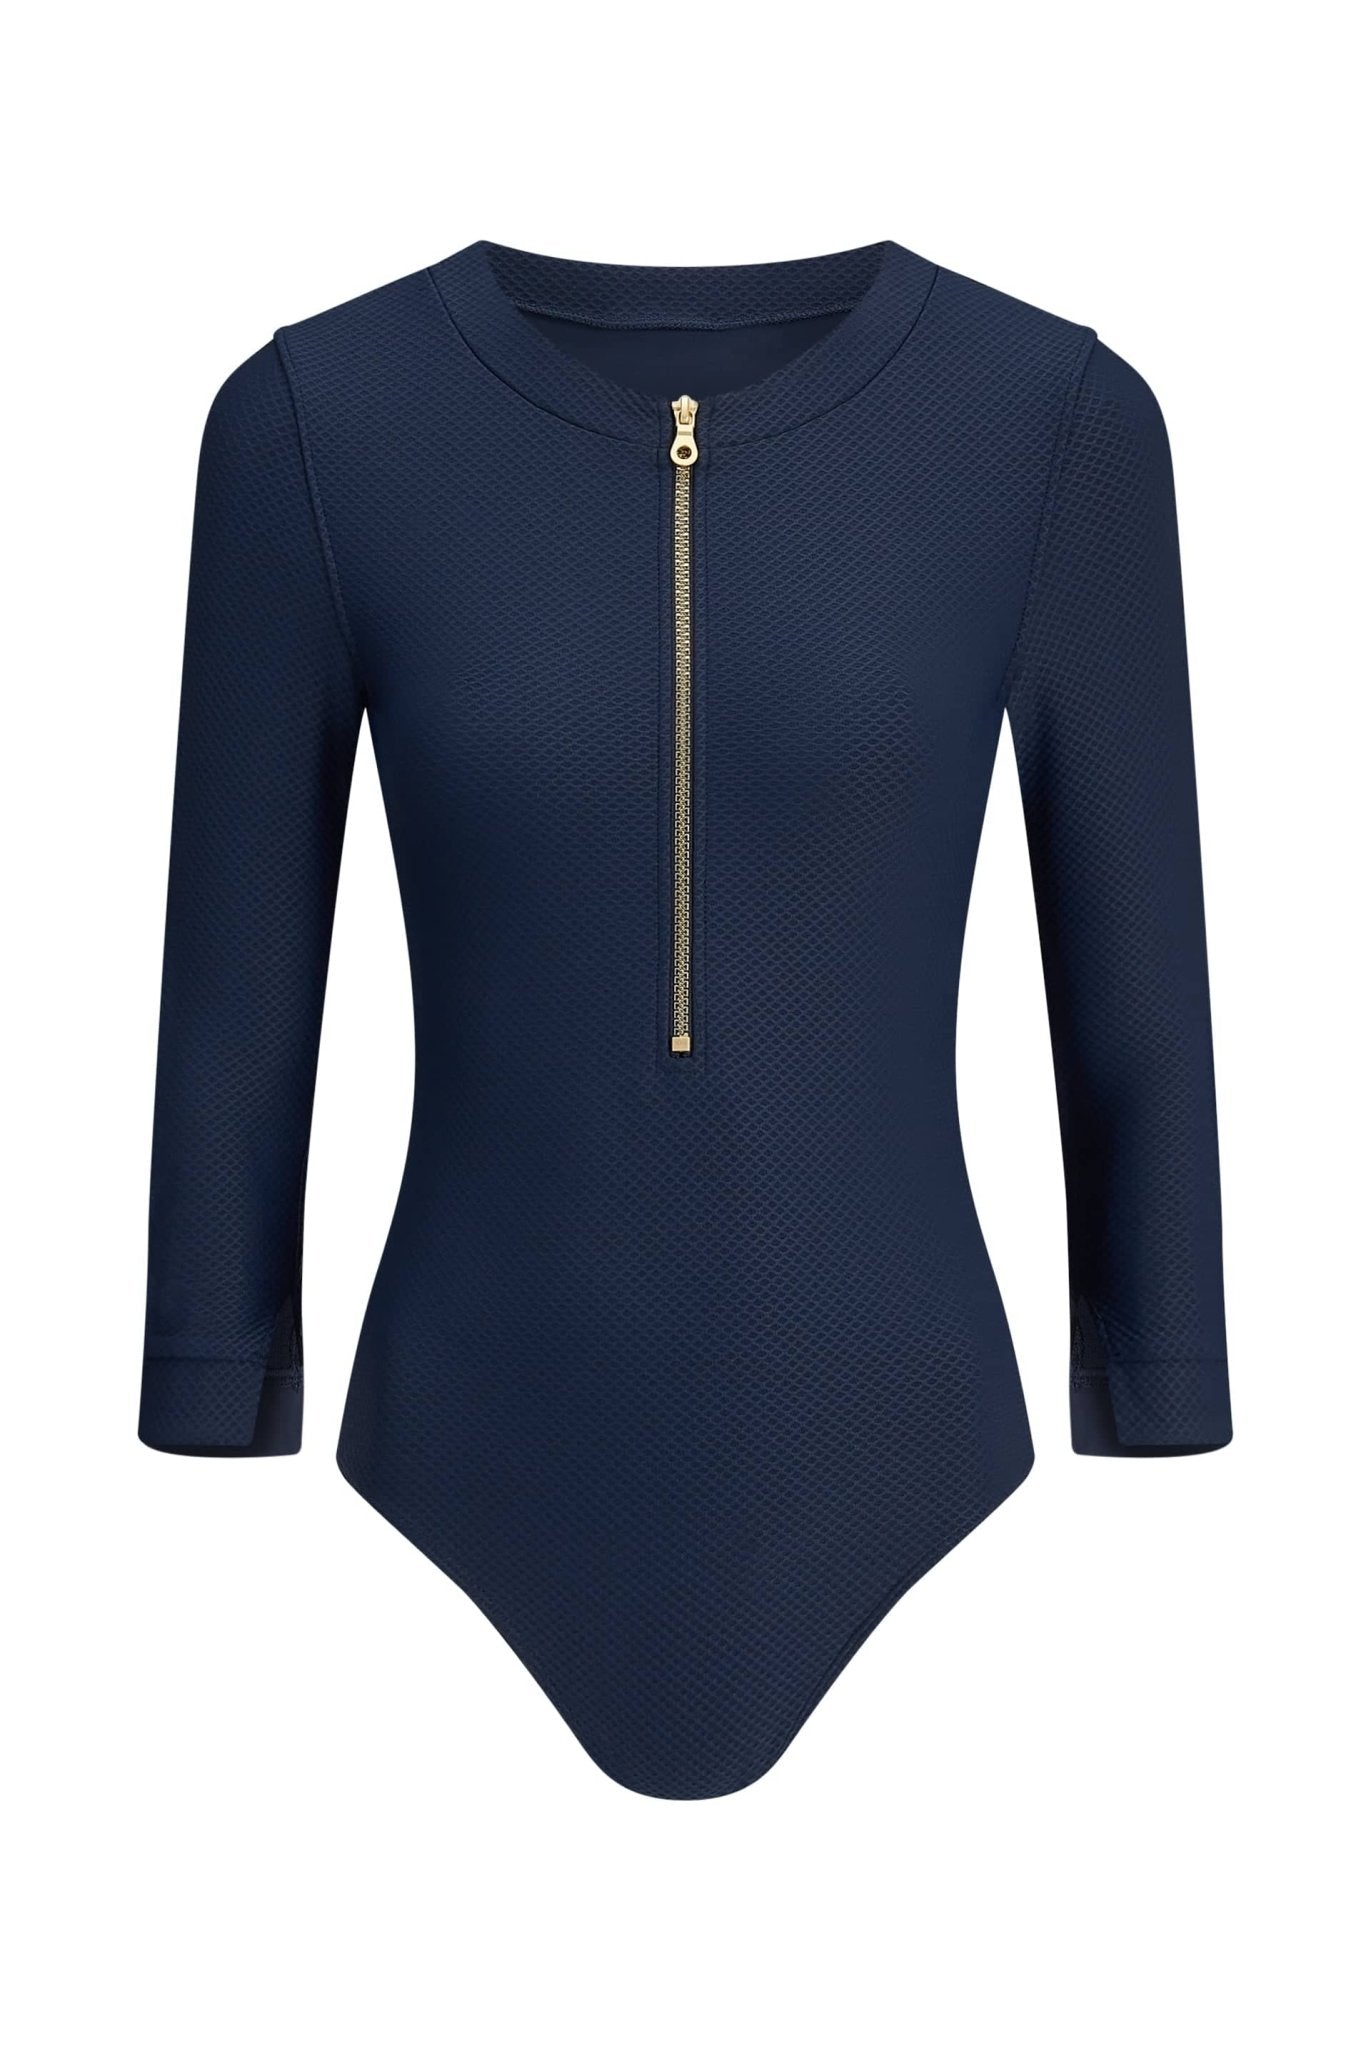 Orient Long Sleeve Bodysuit in Navy Blue - Heidi Klein - UK Store